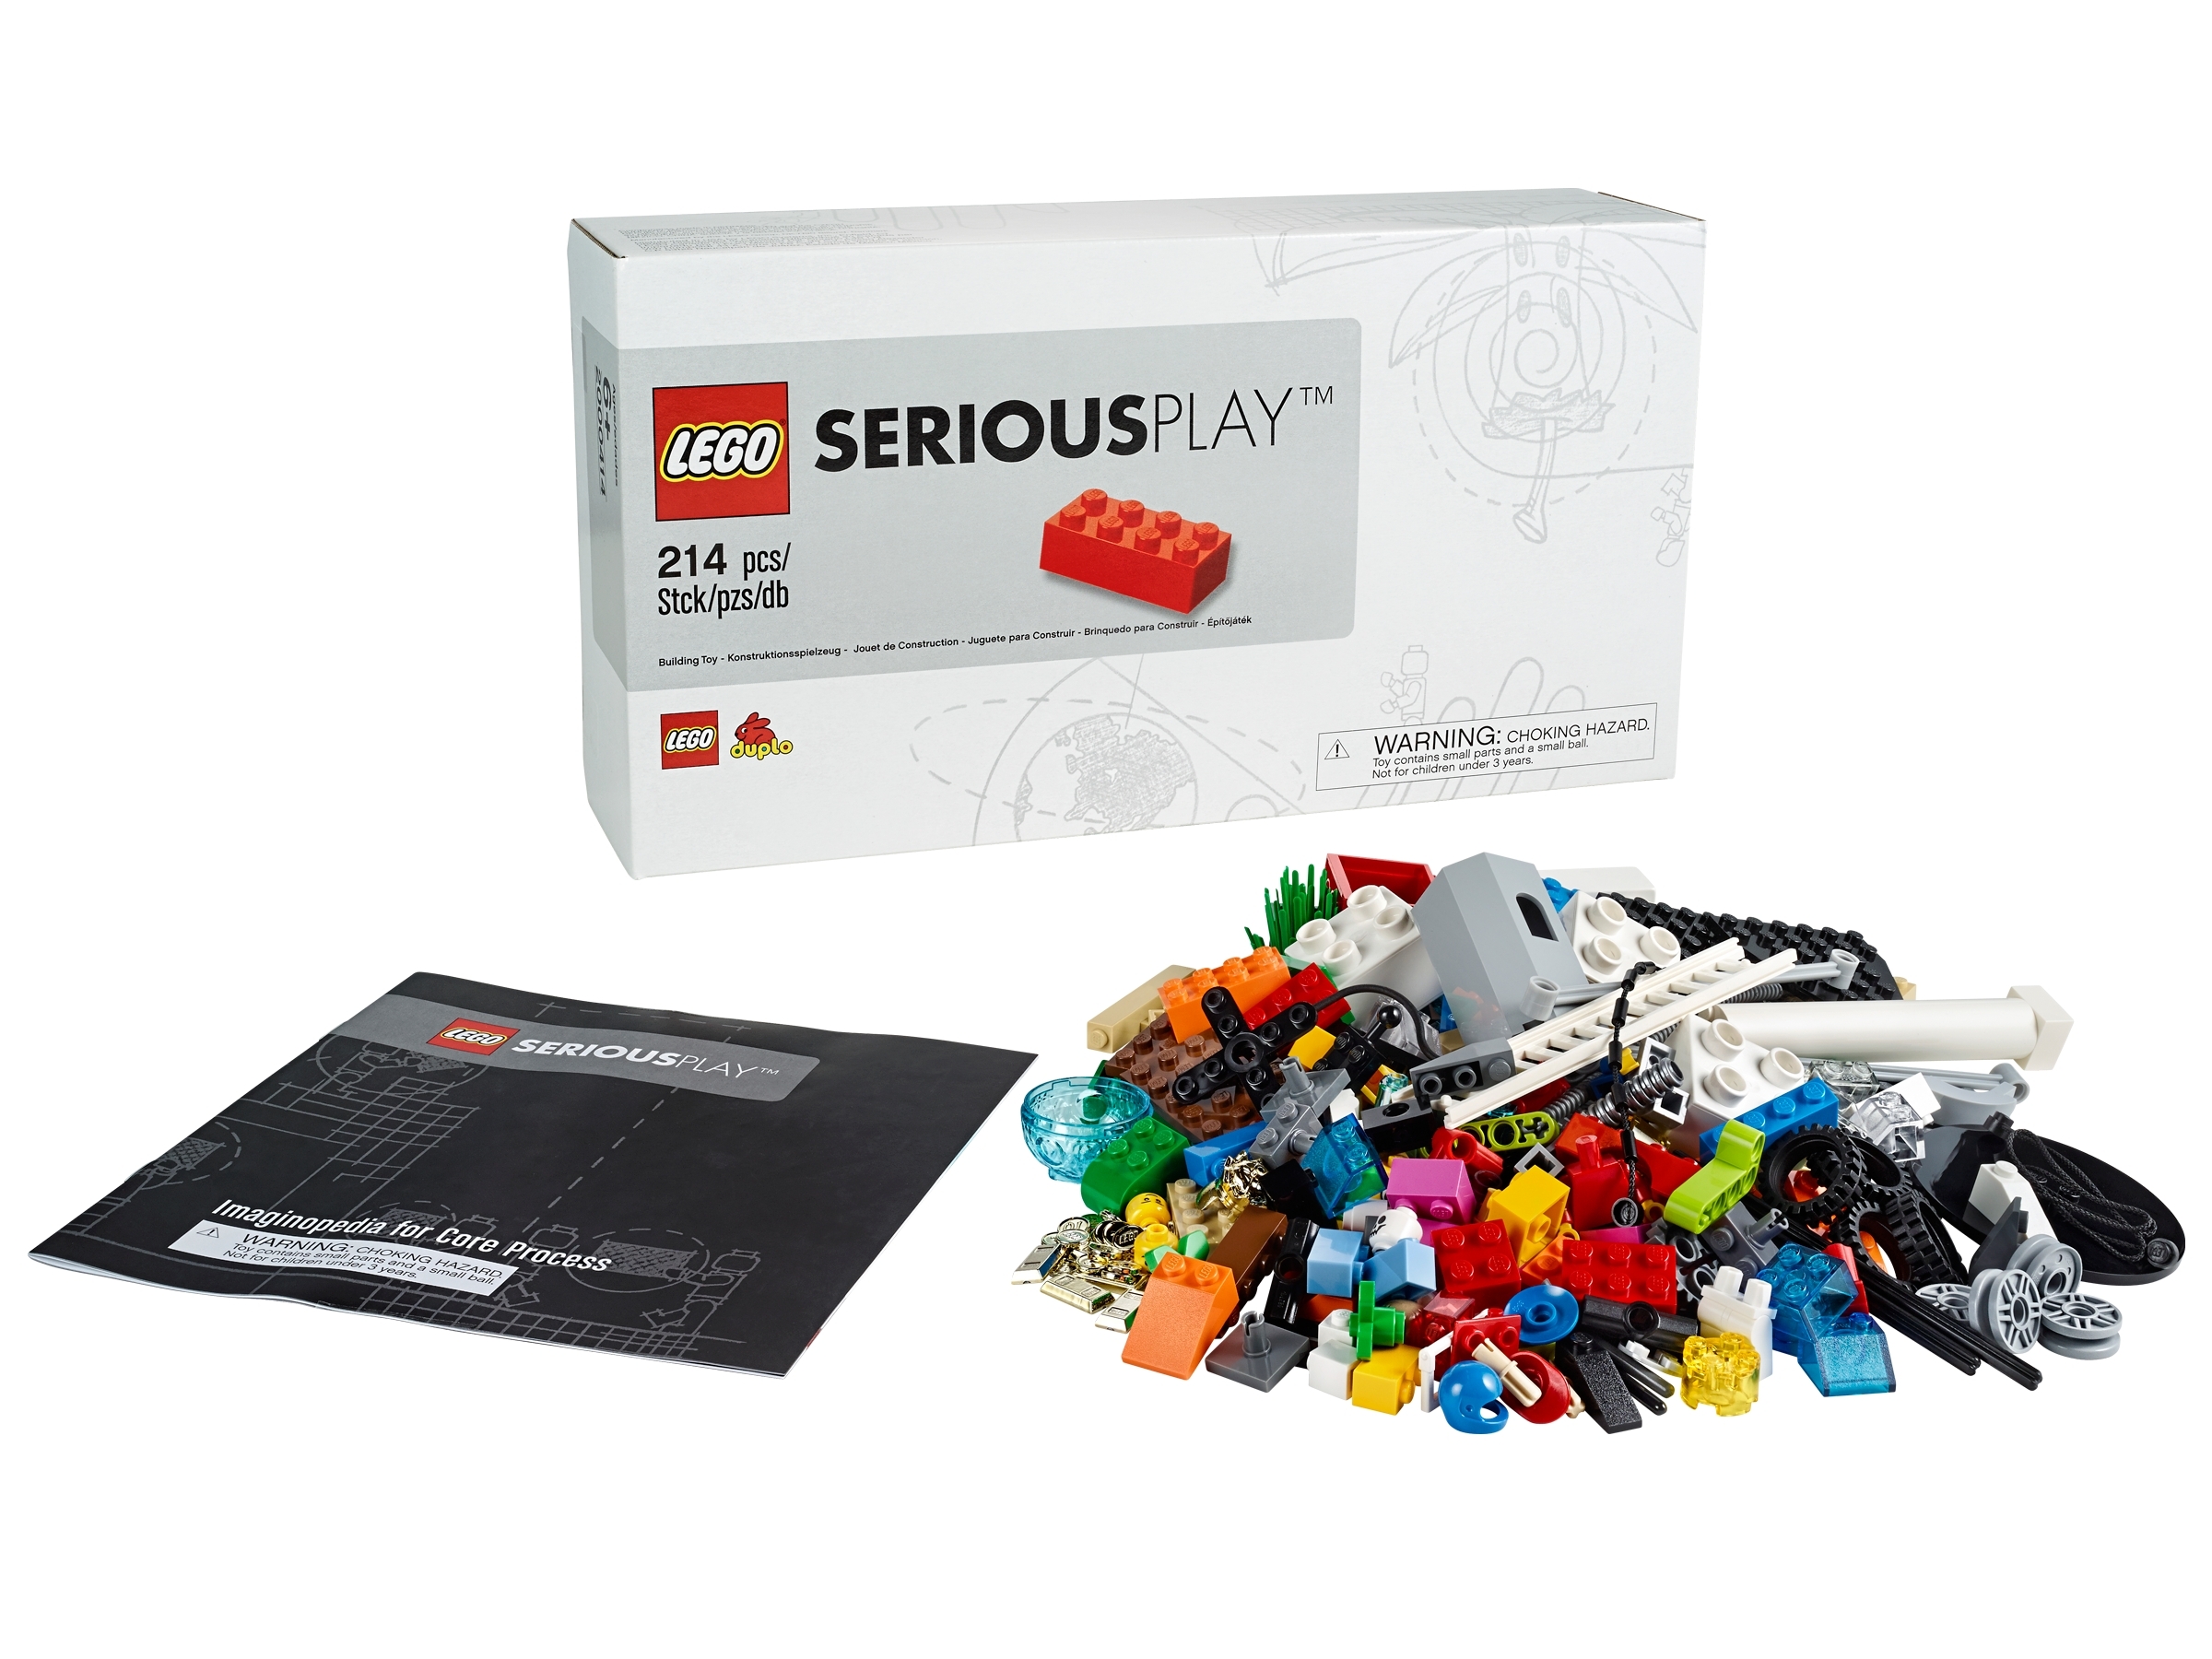 Ungeöffnet Starterset Serious Play Starter Kit 234 Sealed LEGO® 2000414 OVP 